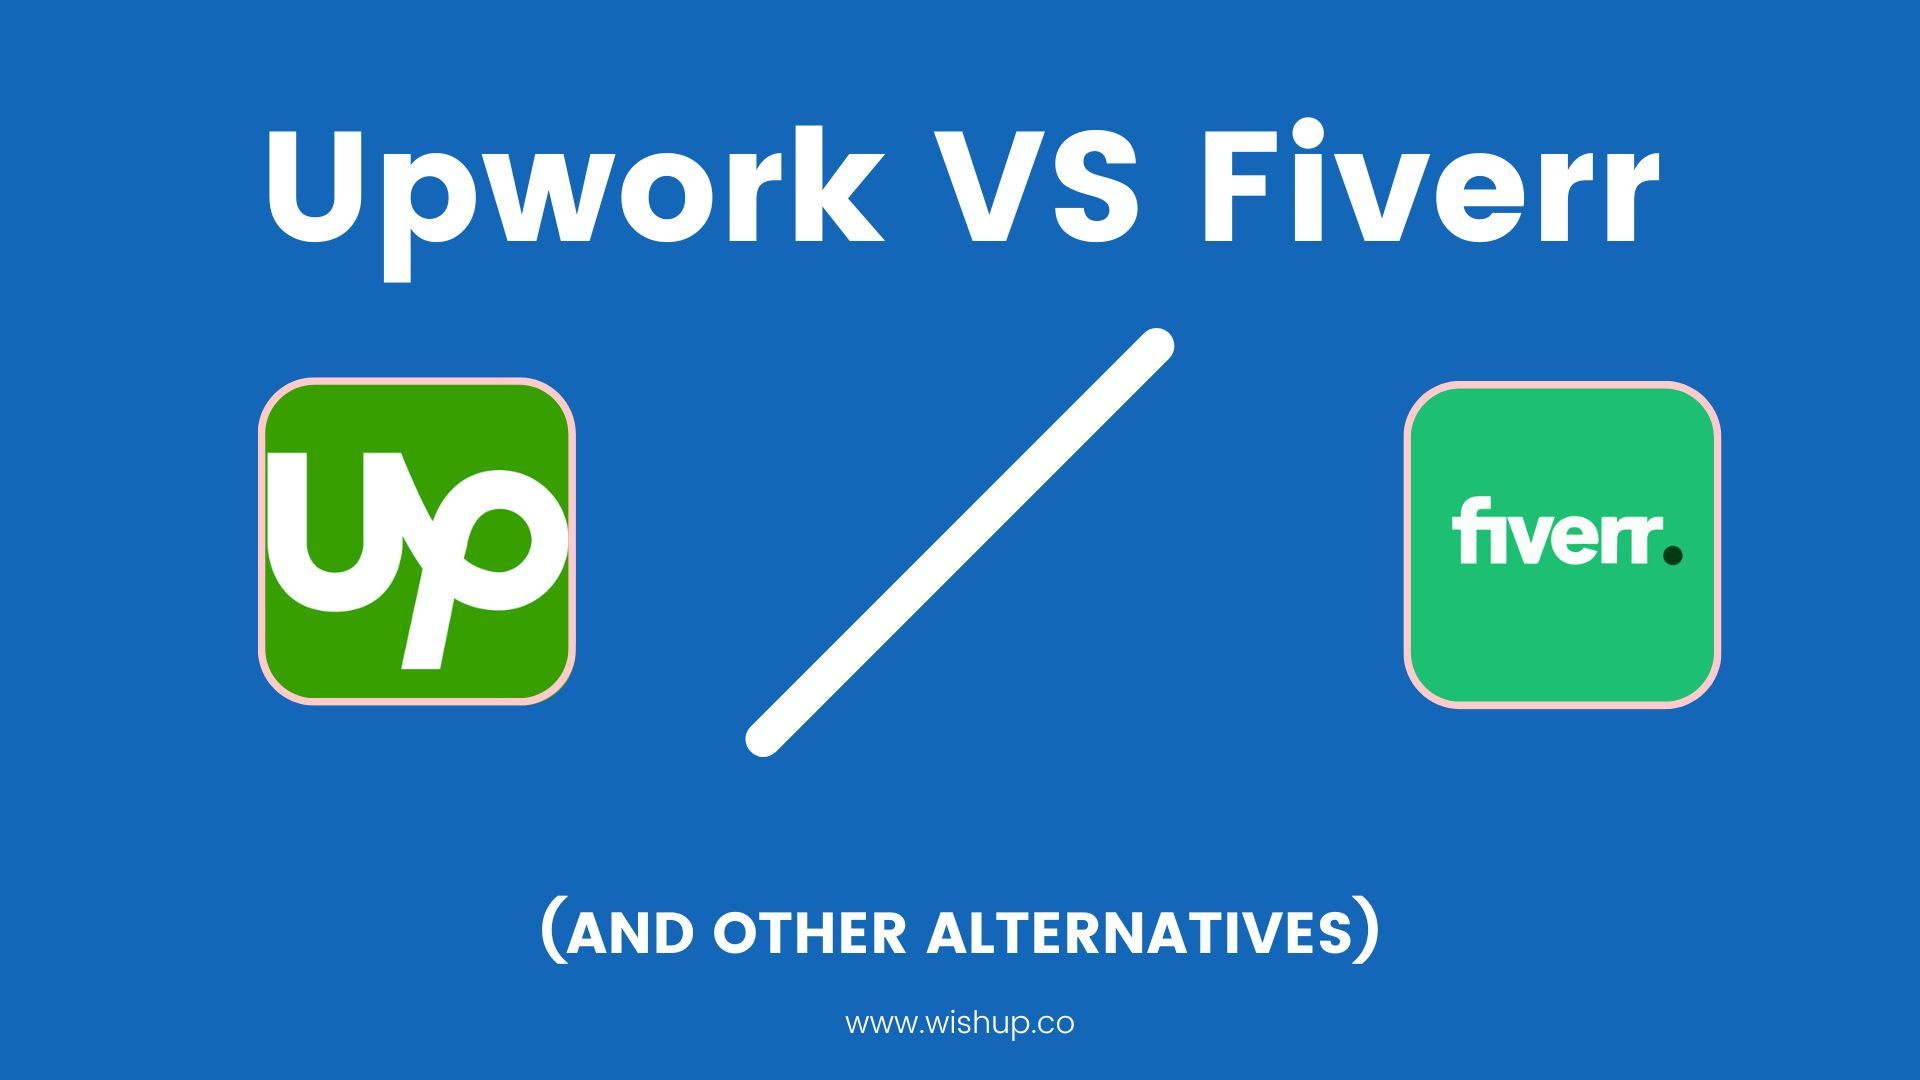 Upwork vs. Fiverr